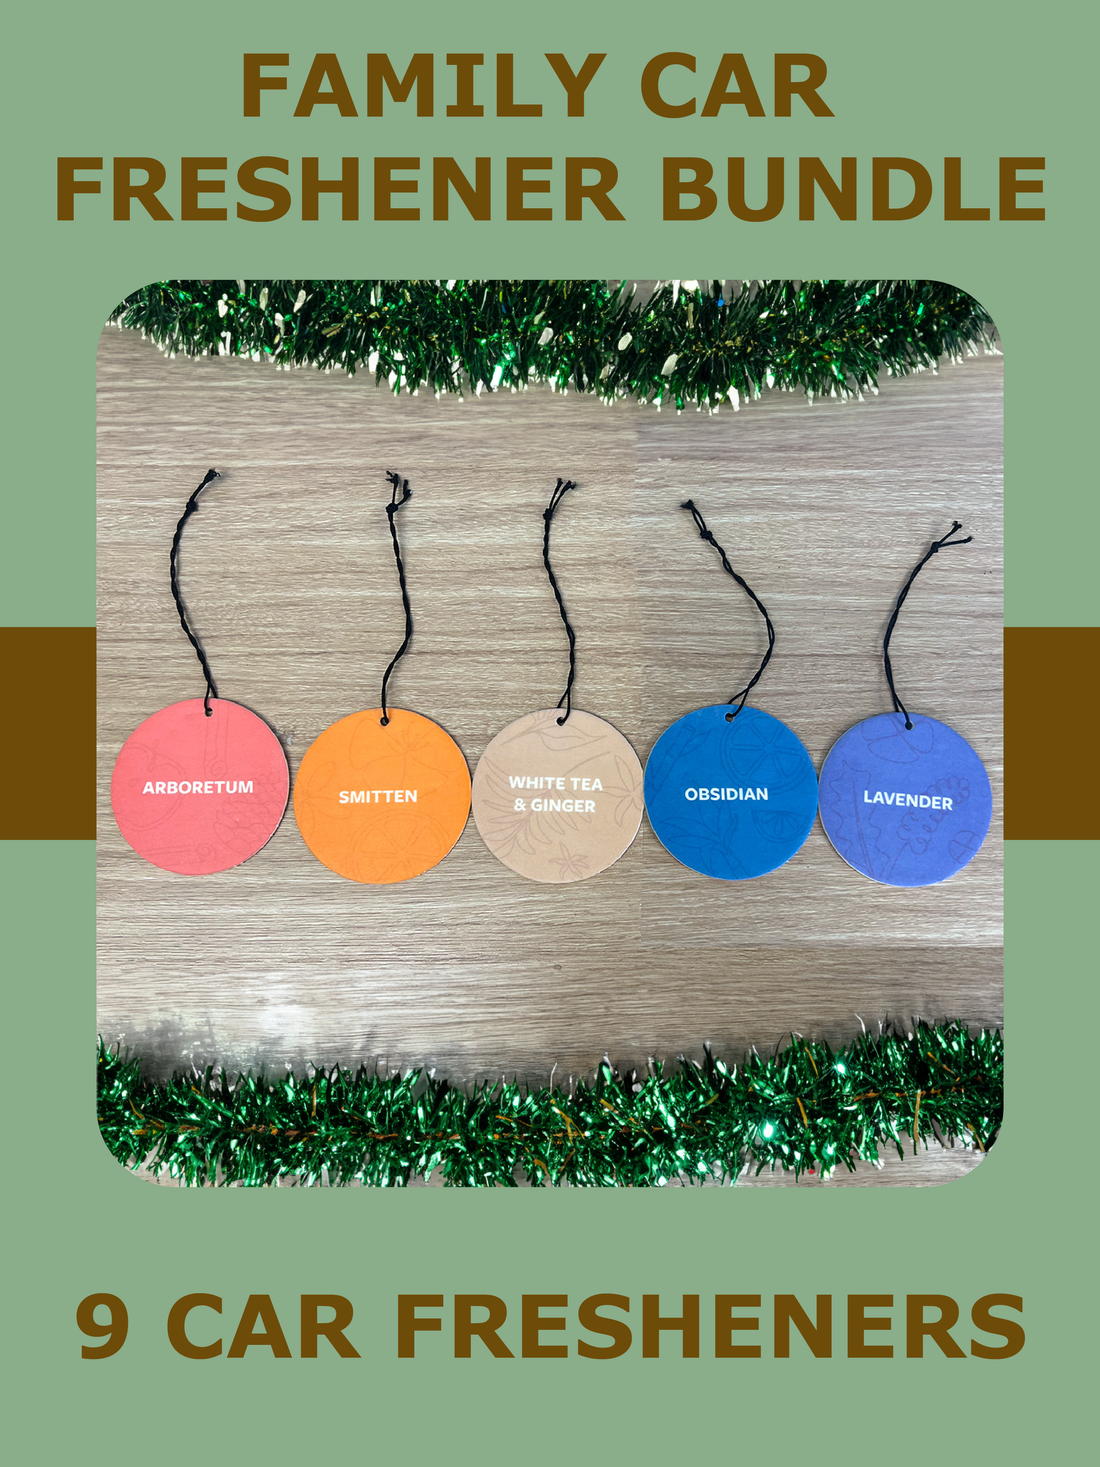 All 5 Fresheners for the Family Freshener Bundle